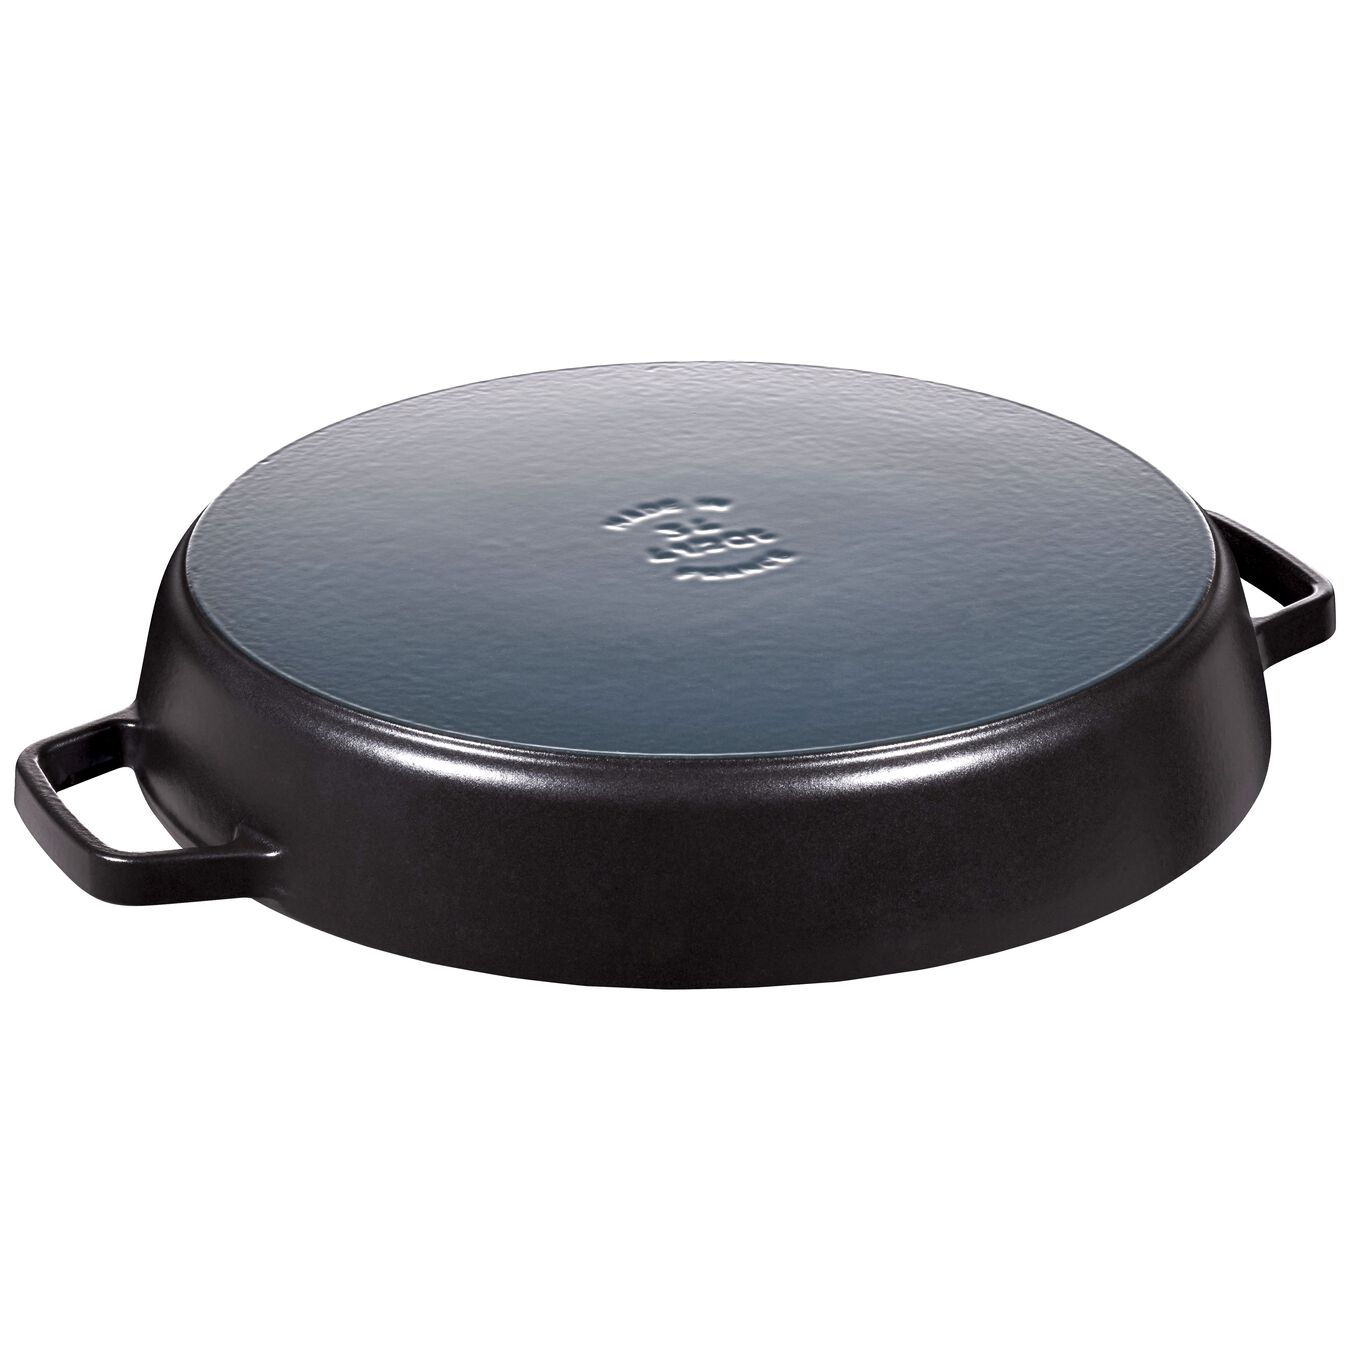 34 cm round Cast iron Paella pan,,large 2